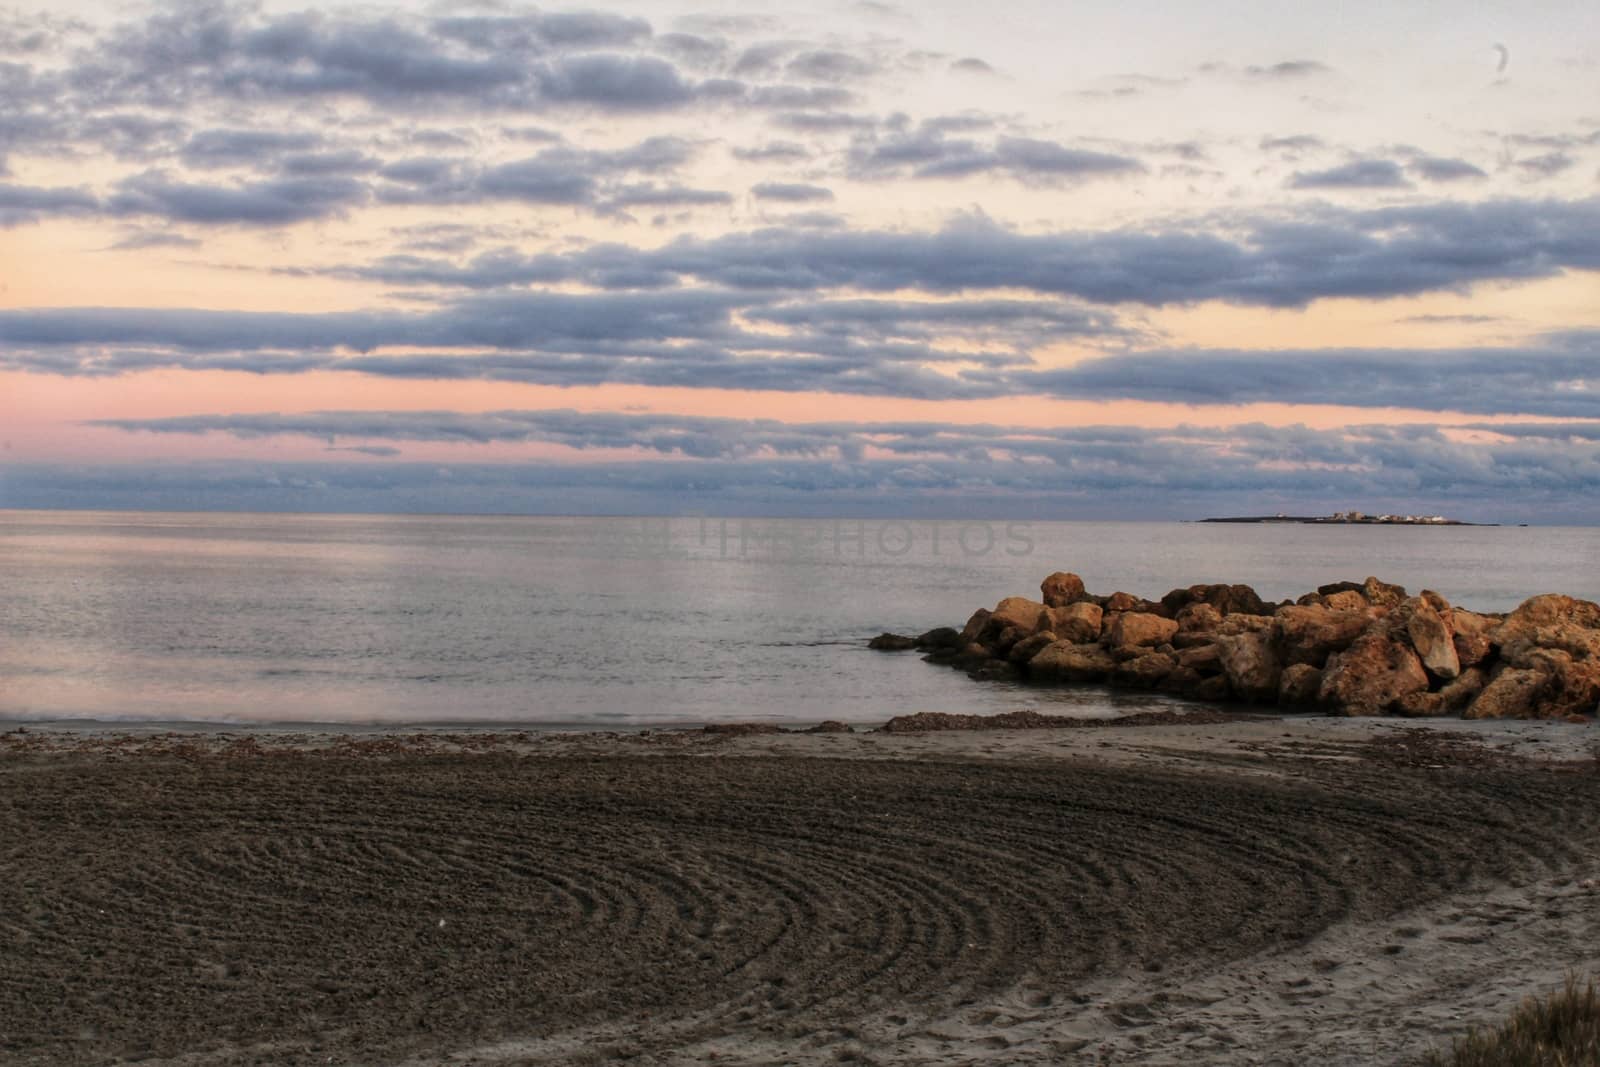 Sunset on the beach in Santa Pola, Alicante, Spain